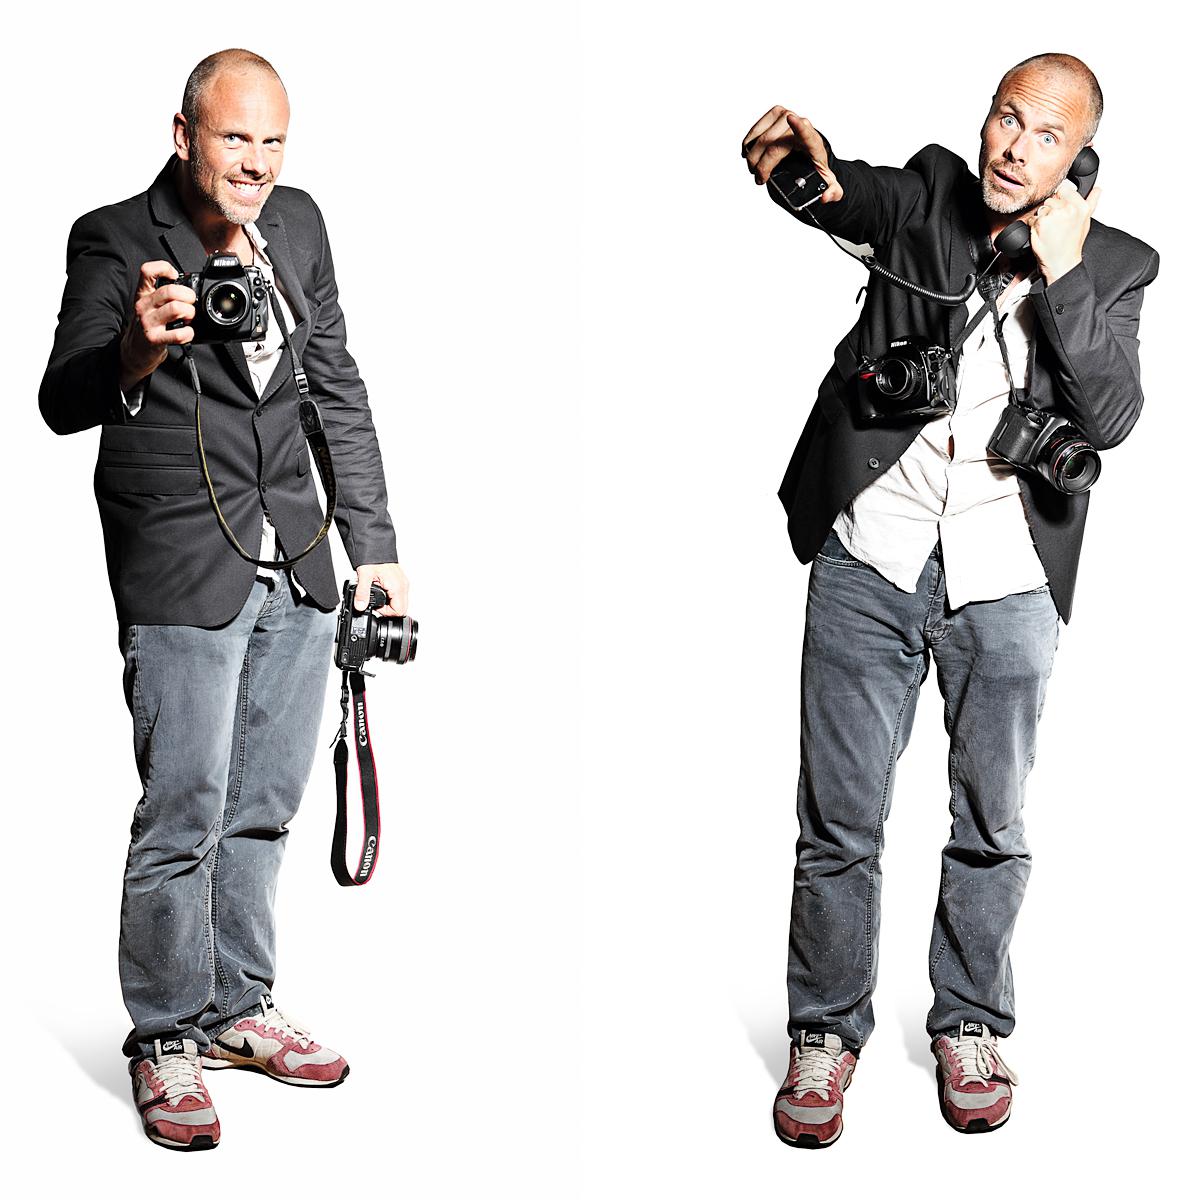 Portrait of Fredrik Bond, Director of Shots Magazine by London photographer Julian Hanford